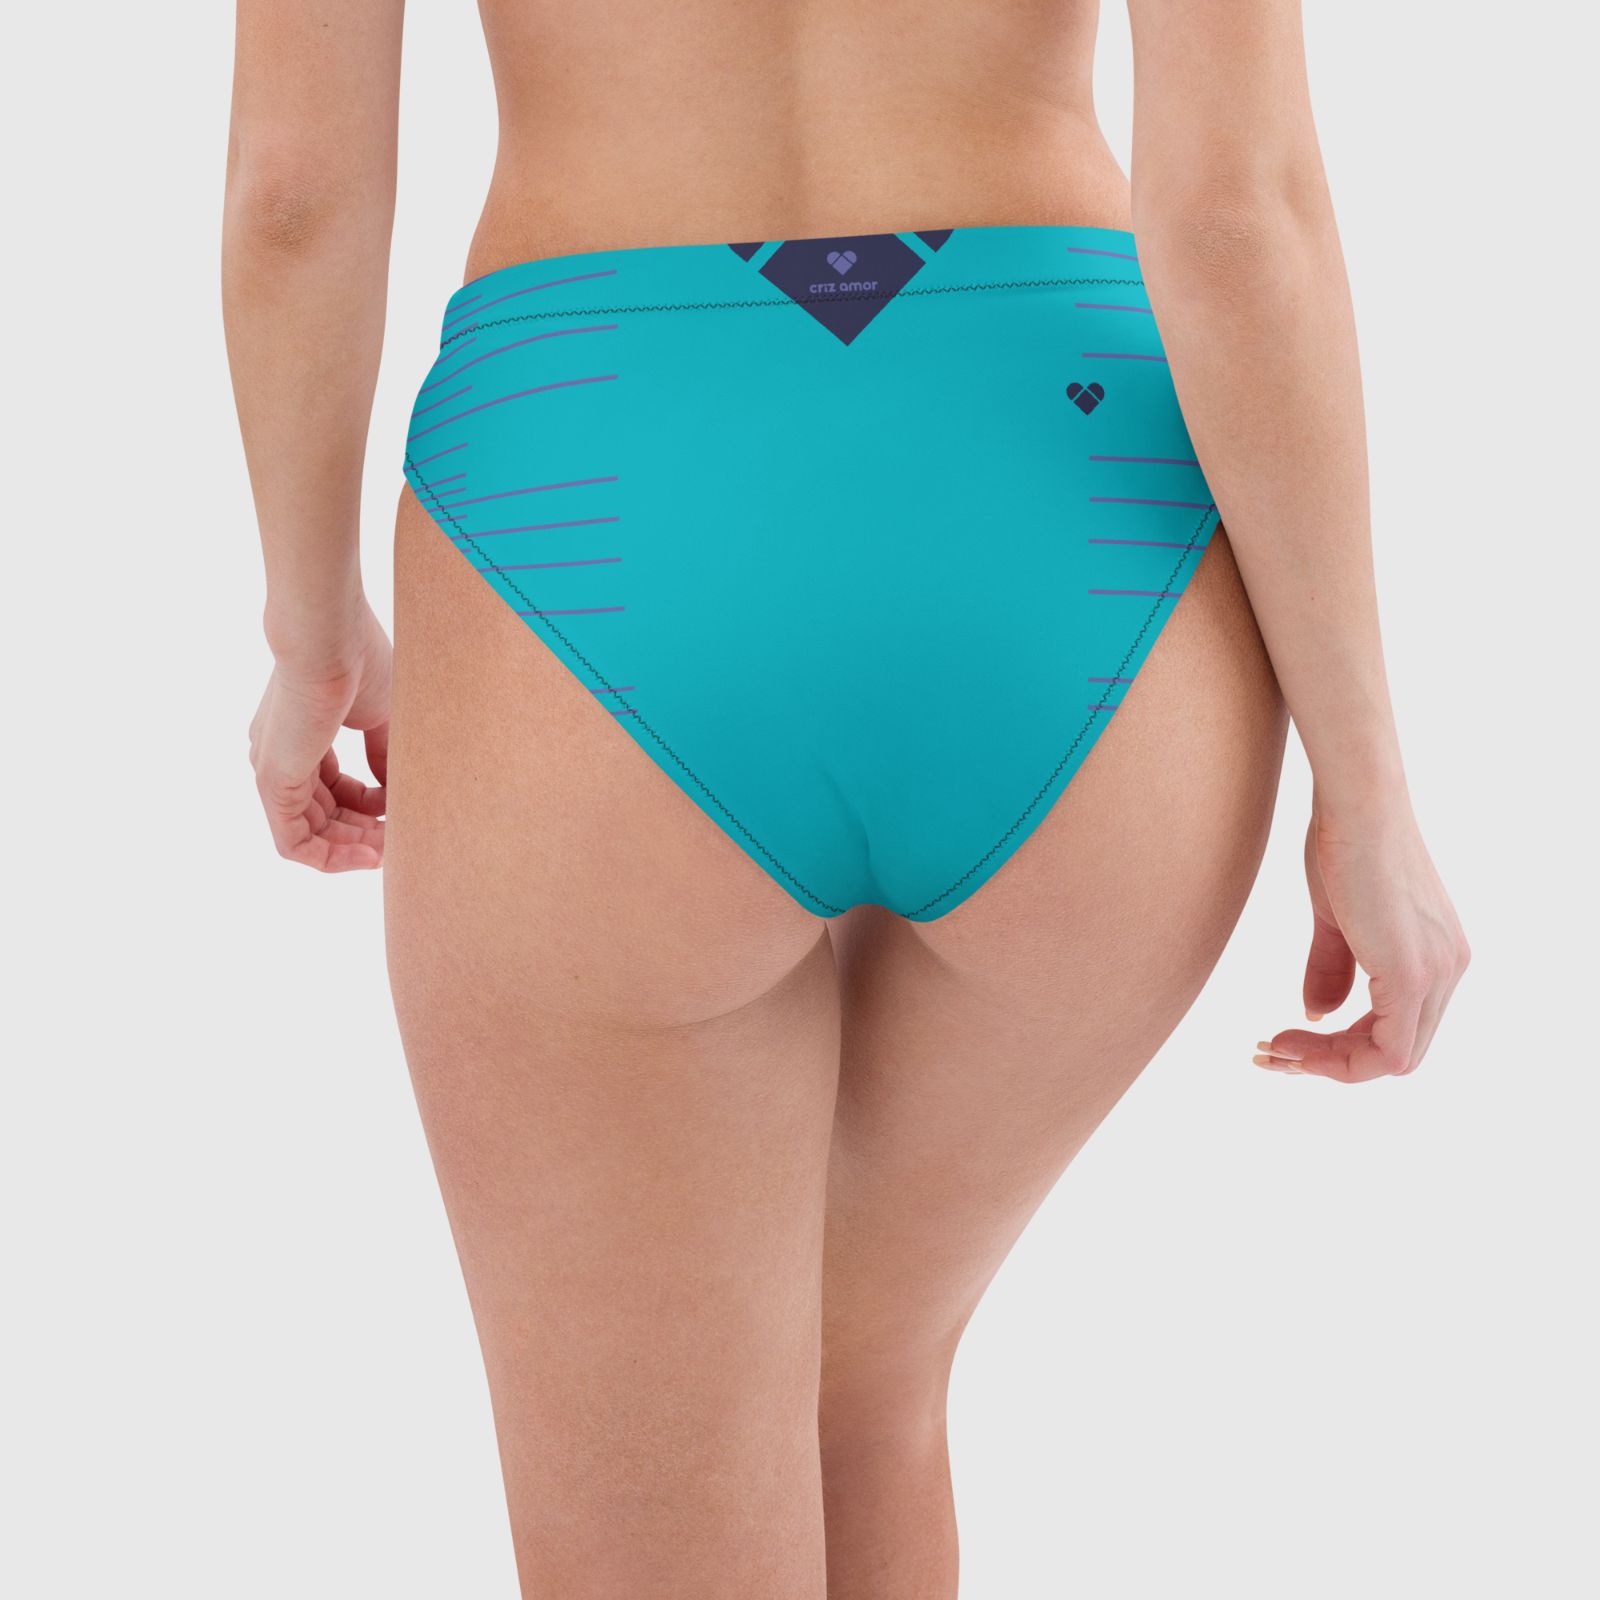 CRiZ AMOR's Turquoise Dual Bikini Bottom